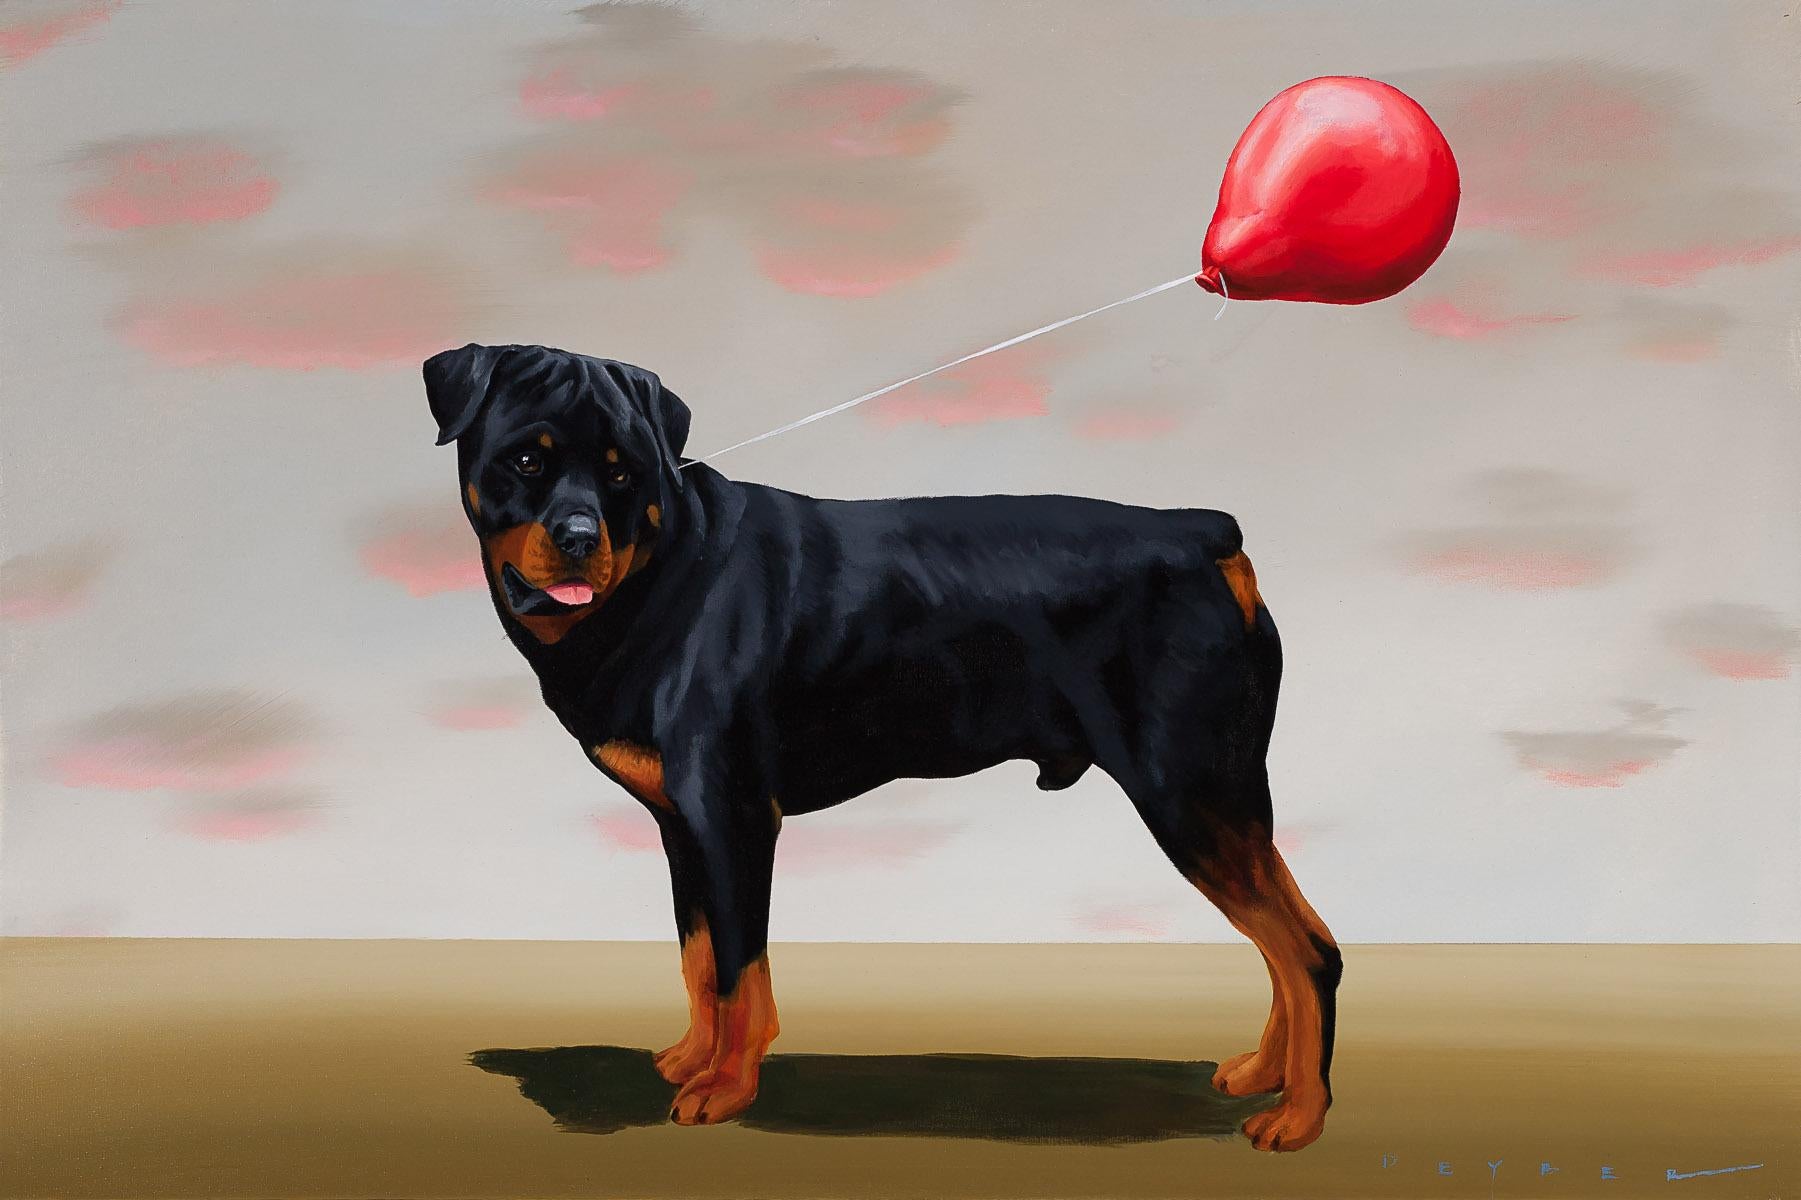 Balloon Dog III (Rottweiler), 2021 - Painting by Robert Deyber 